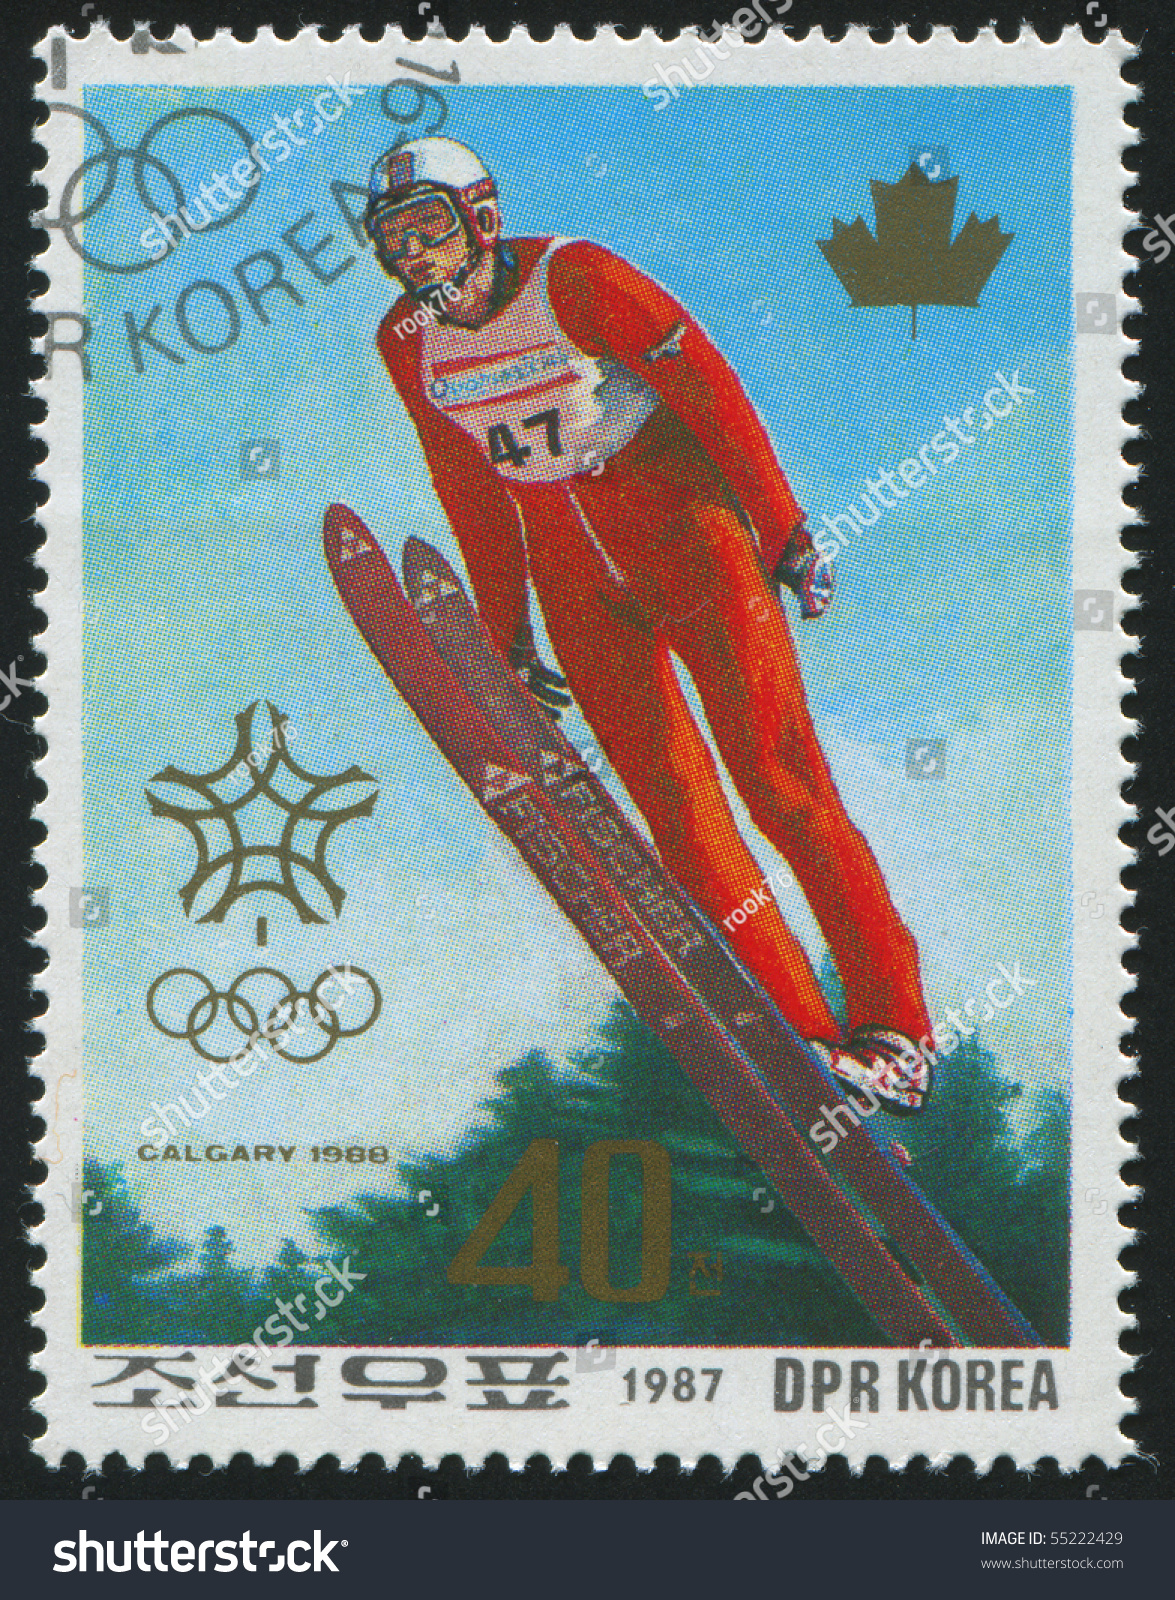 Korea Circa 1987 Stamp Printed Stock Photo 55222429 Shutterstock regarding ski jumping 1987 intended for Residence